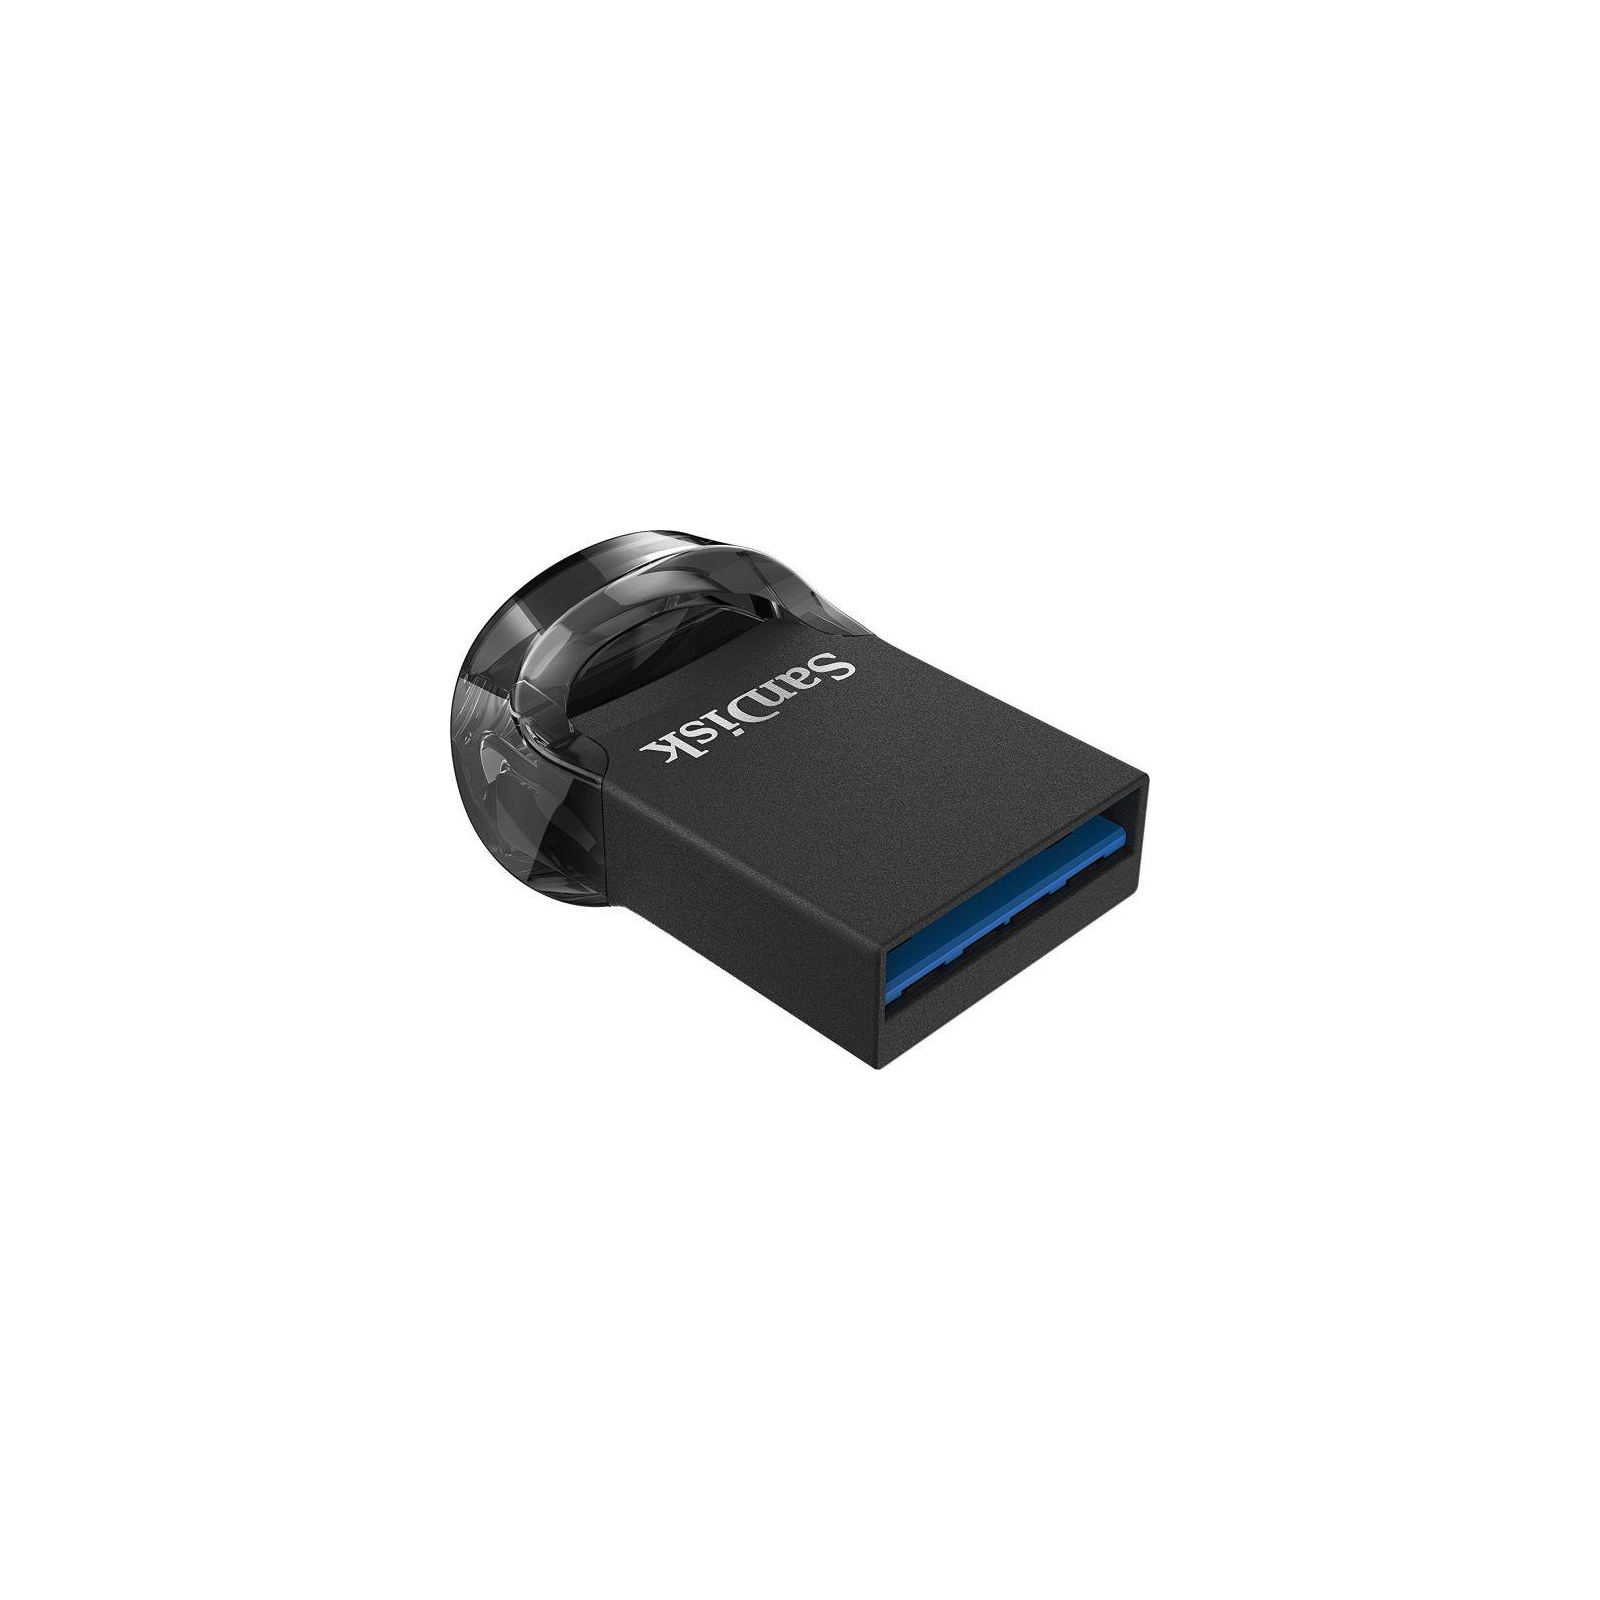 USB флеш накопитель SanDisk 64GB Ultra Fit USB 3.1 (SDCZ430-064G-G46) изображение 5